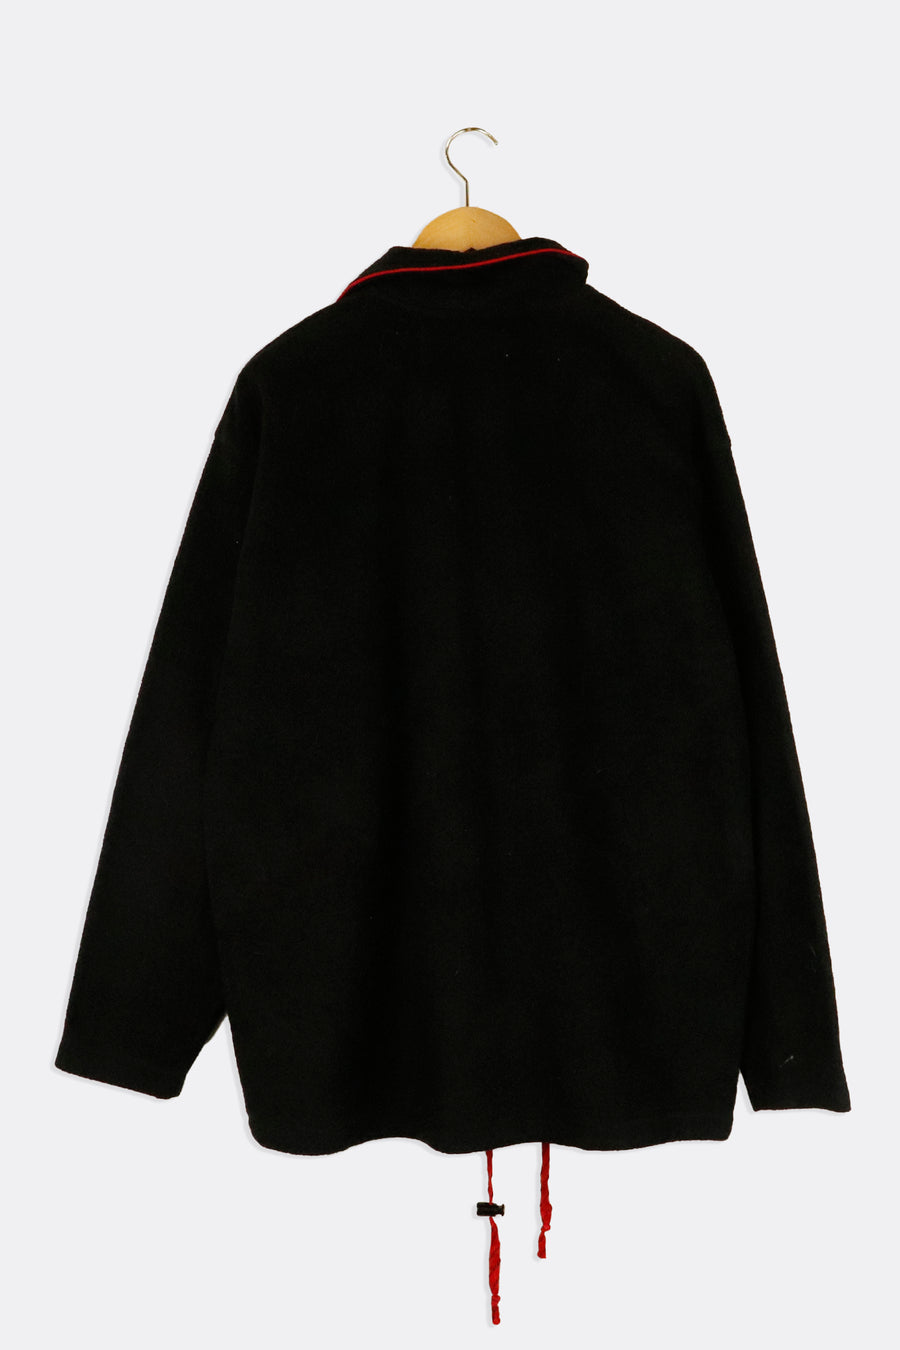 Vintage America Perry Ellis Fleece Full Zip Red Collar Outerwear Sz M